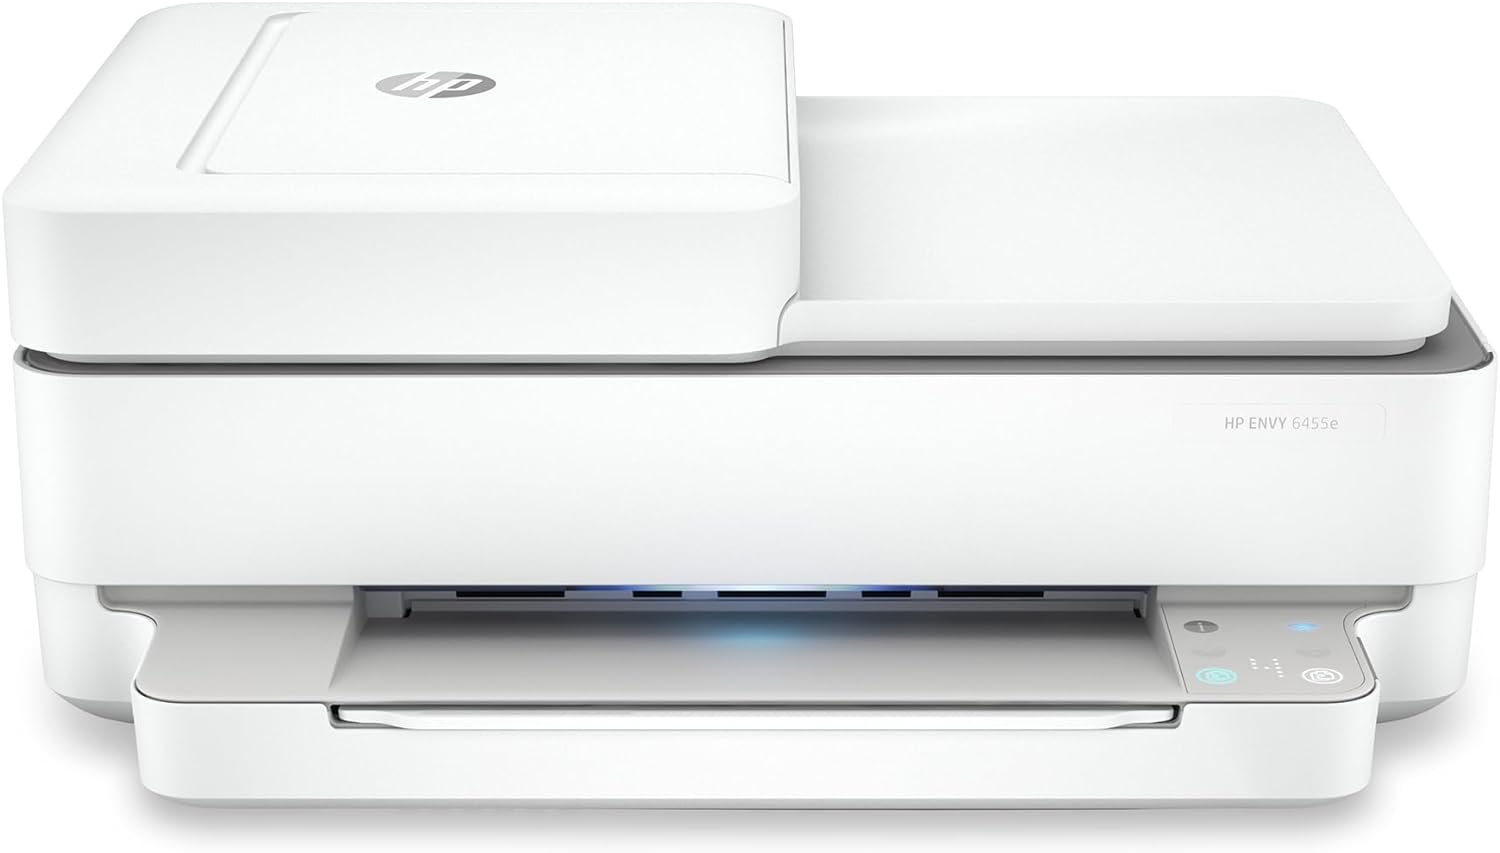 HP ENVY 6455e Wireless Color Inkjet Printer